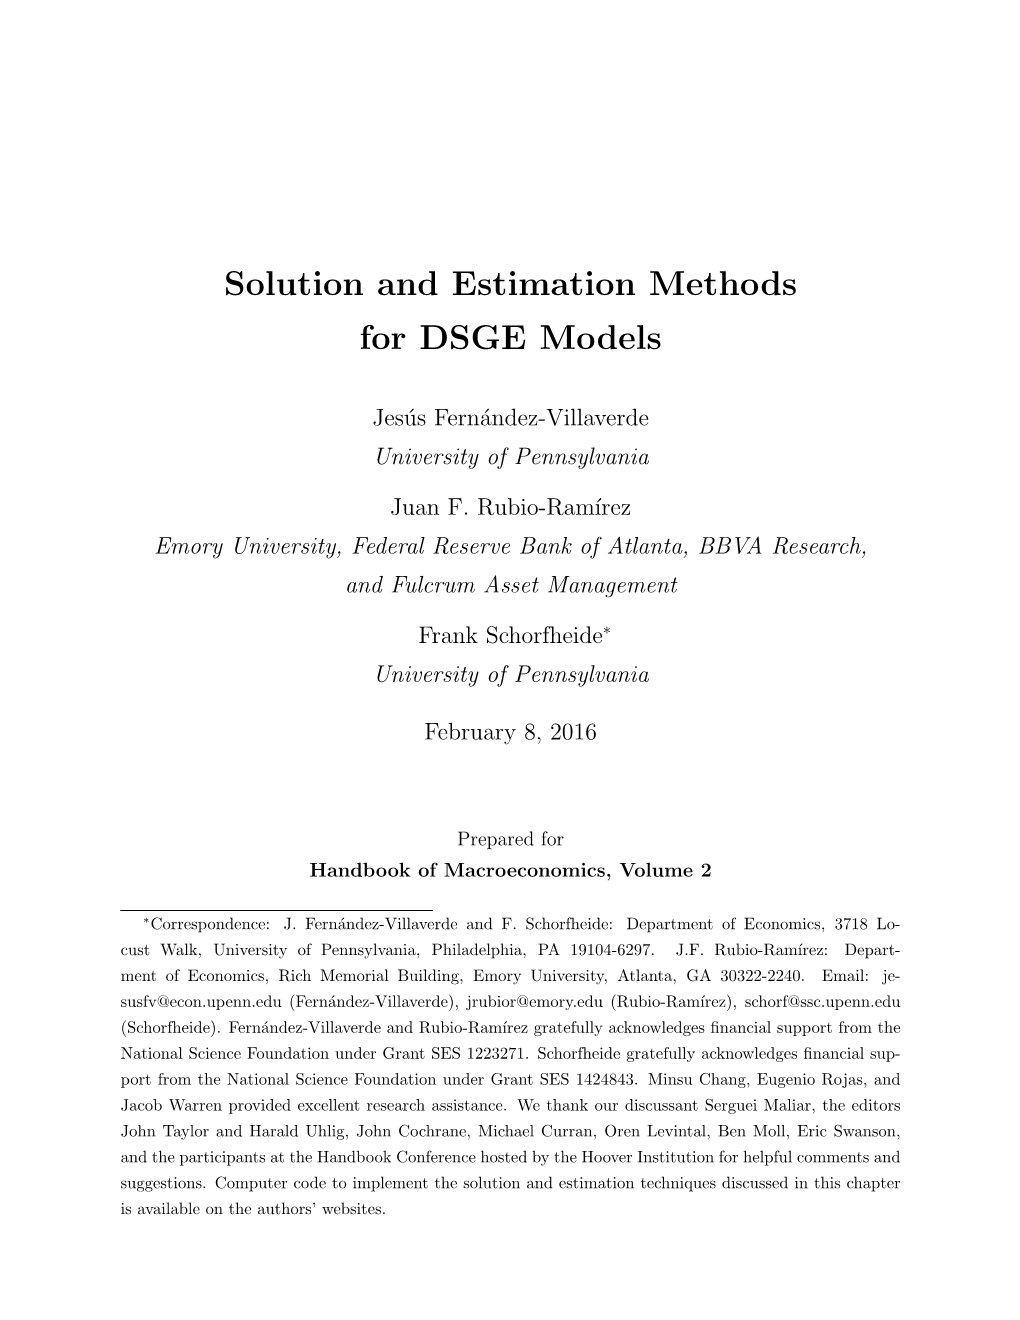 Solution and Estimation Methods for DSGE Models